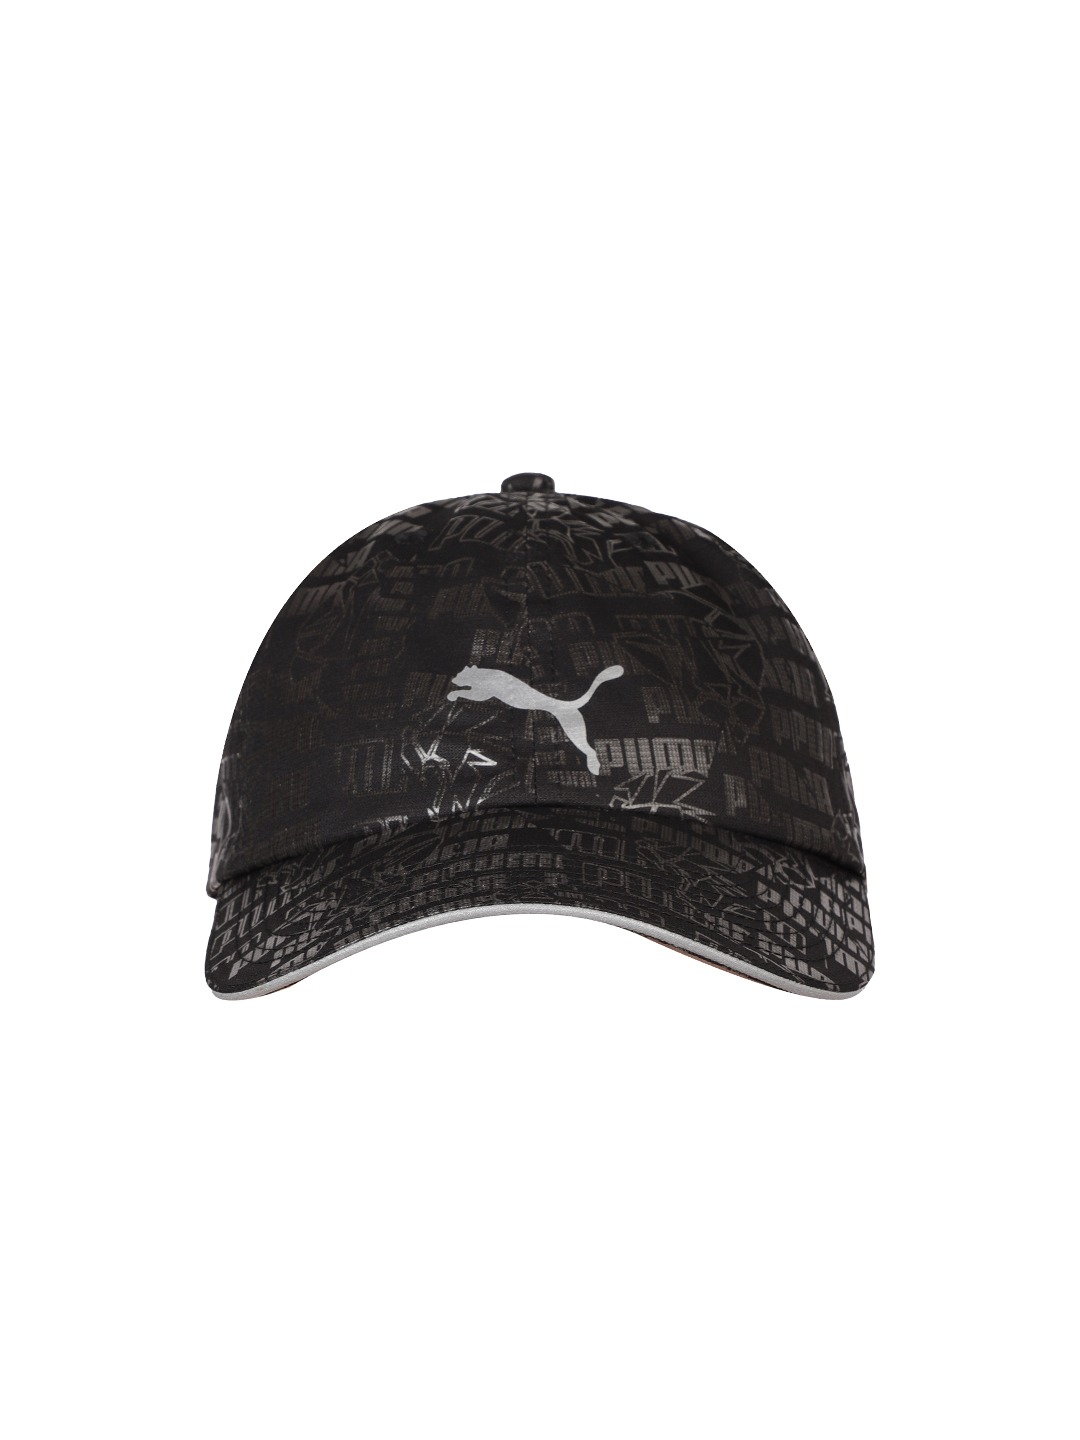 Accessories Caps | Puma Unisex Black Printed Running Baseball Cap - VX16889